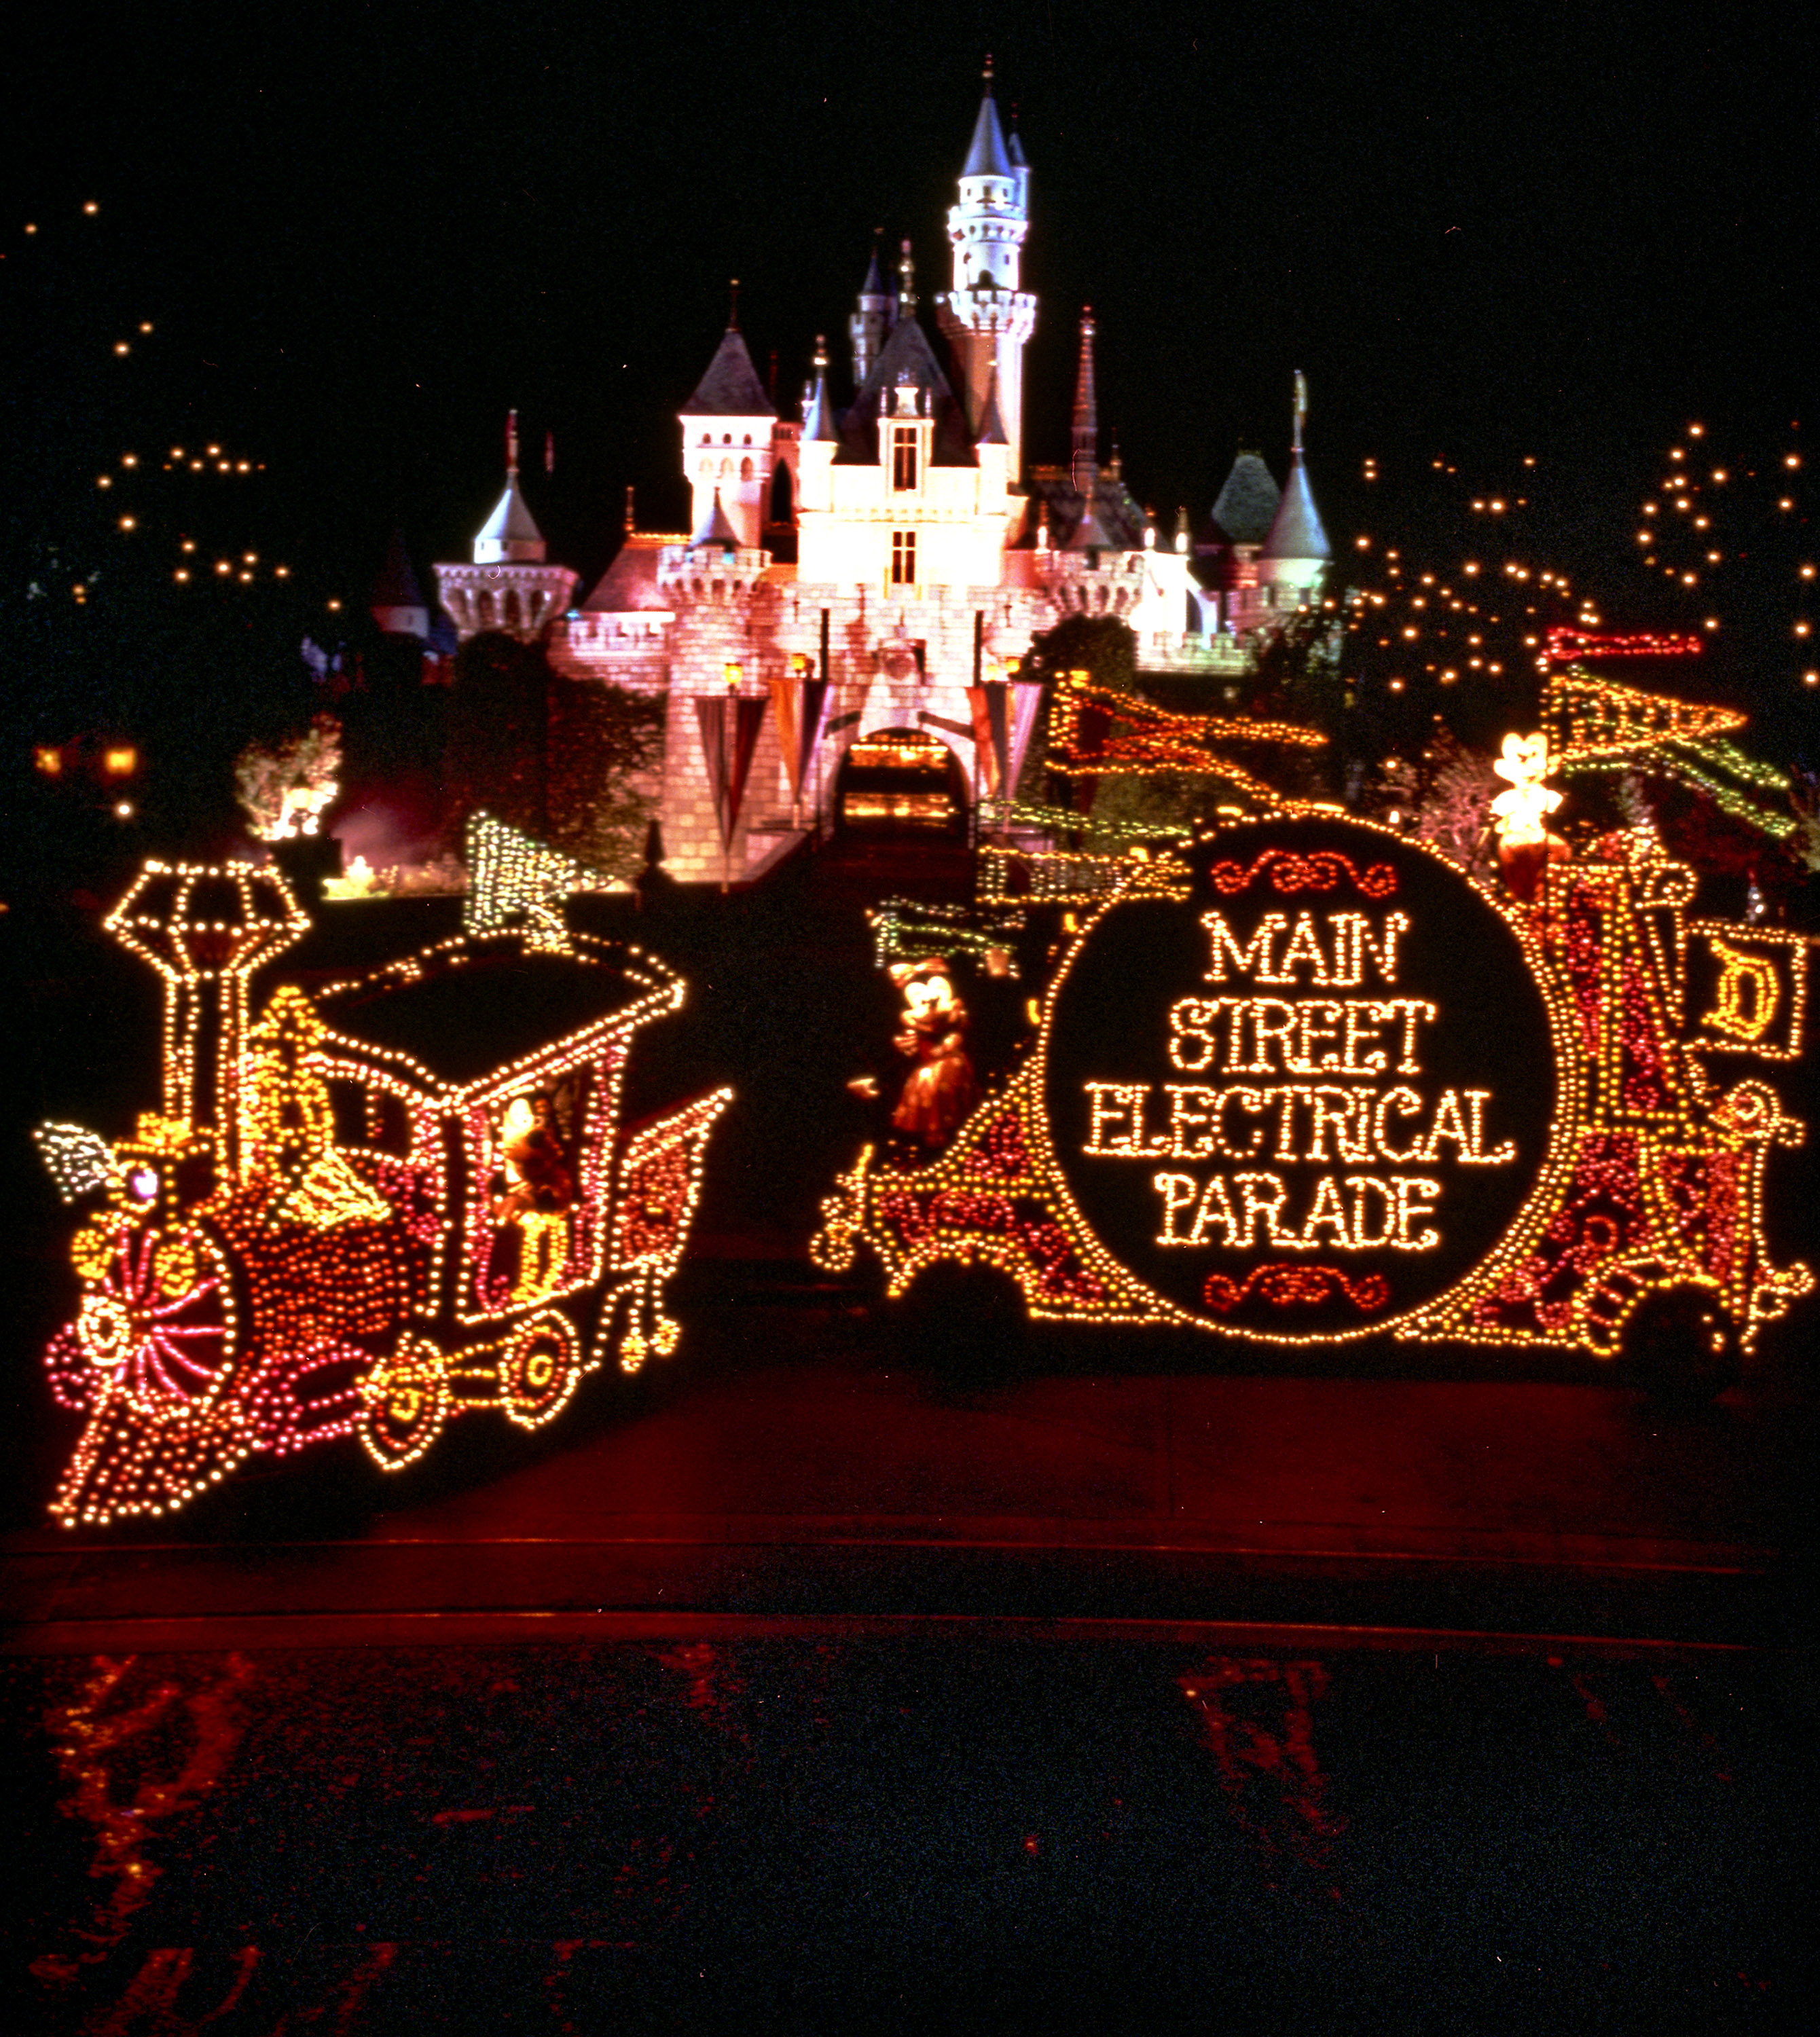 The Main Street Electrical Parade Returns to the Disneyland Resort